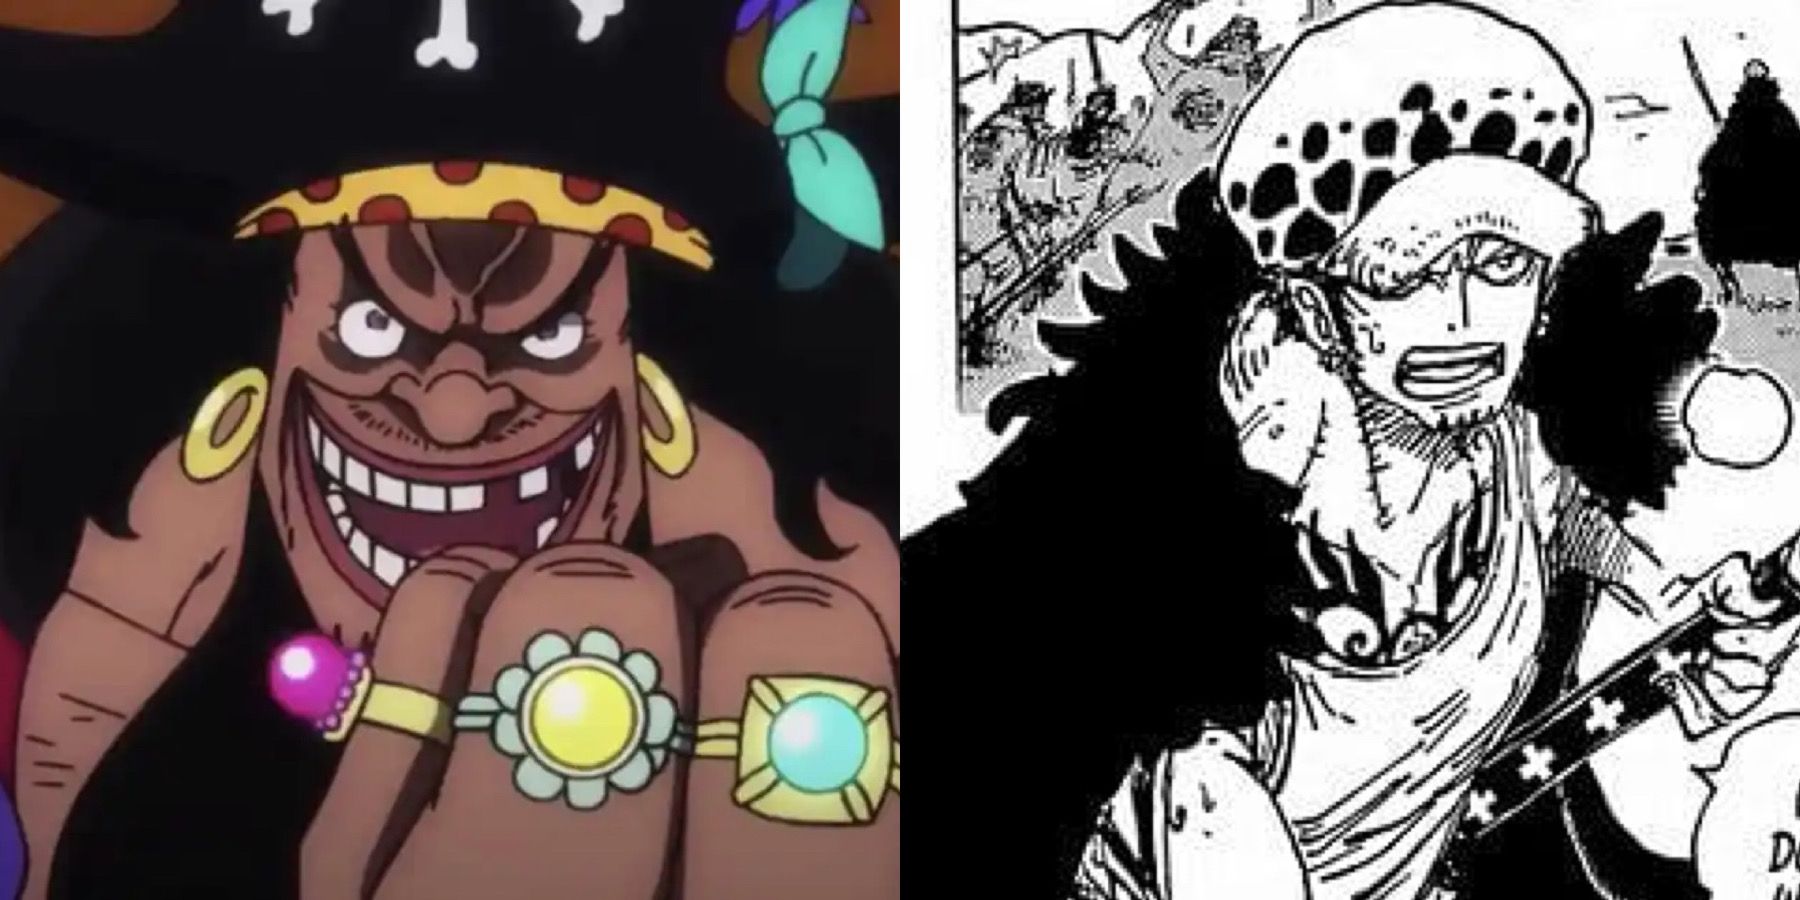 Blackbeard WILL TAKE LAW OPE OPE NO MI? - One Piece 1063 REVIEW 